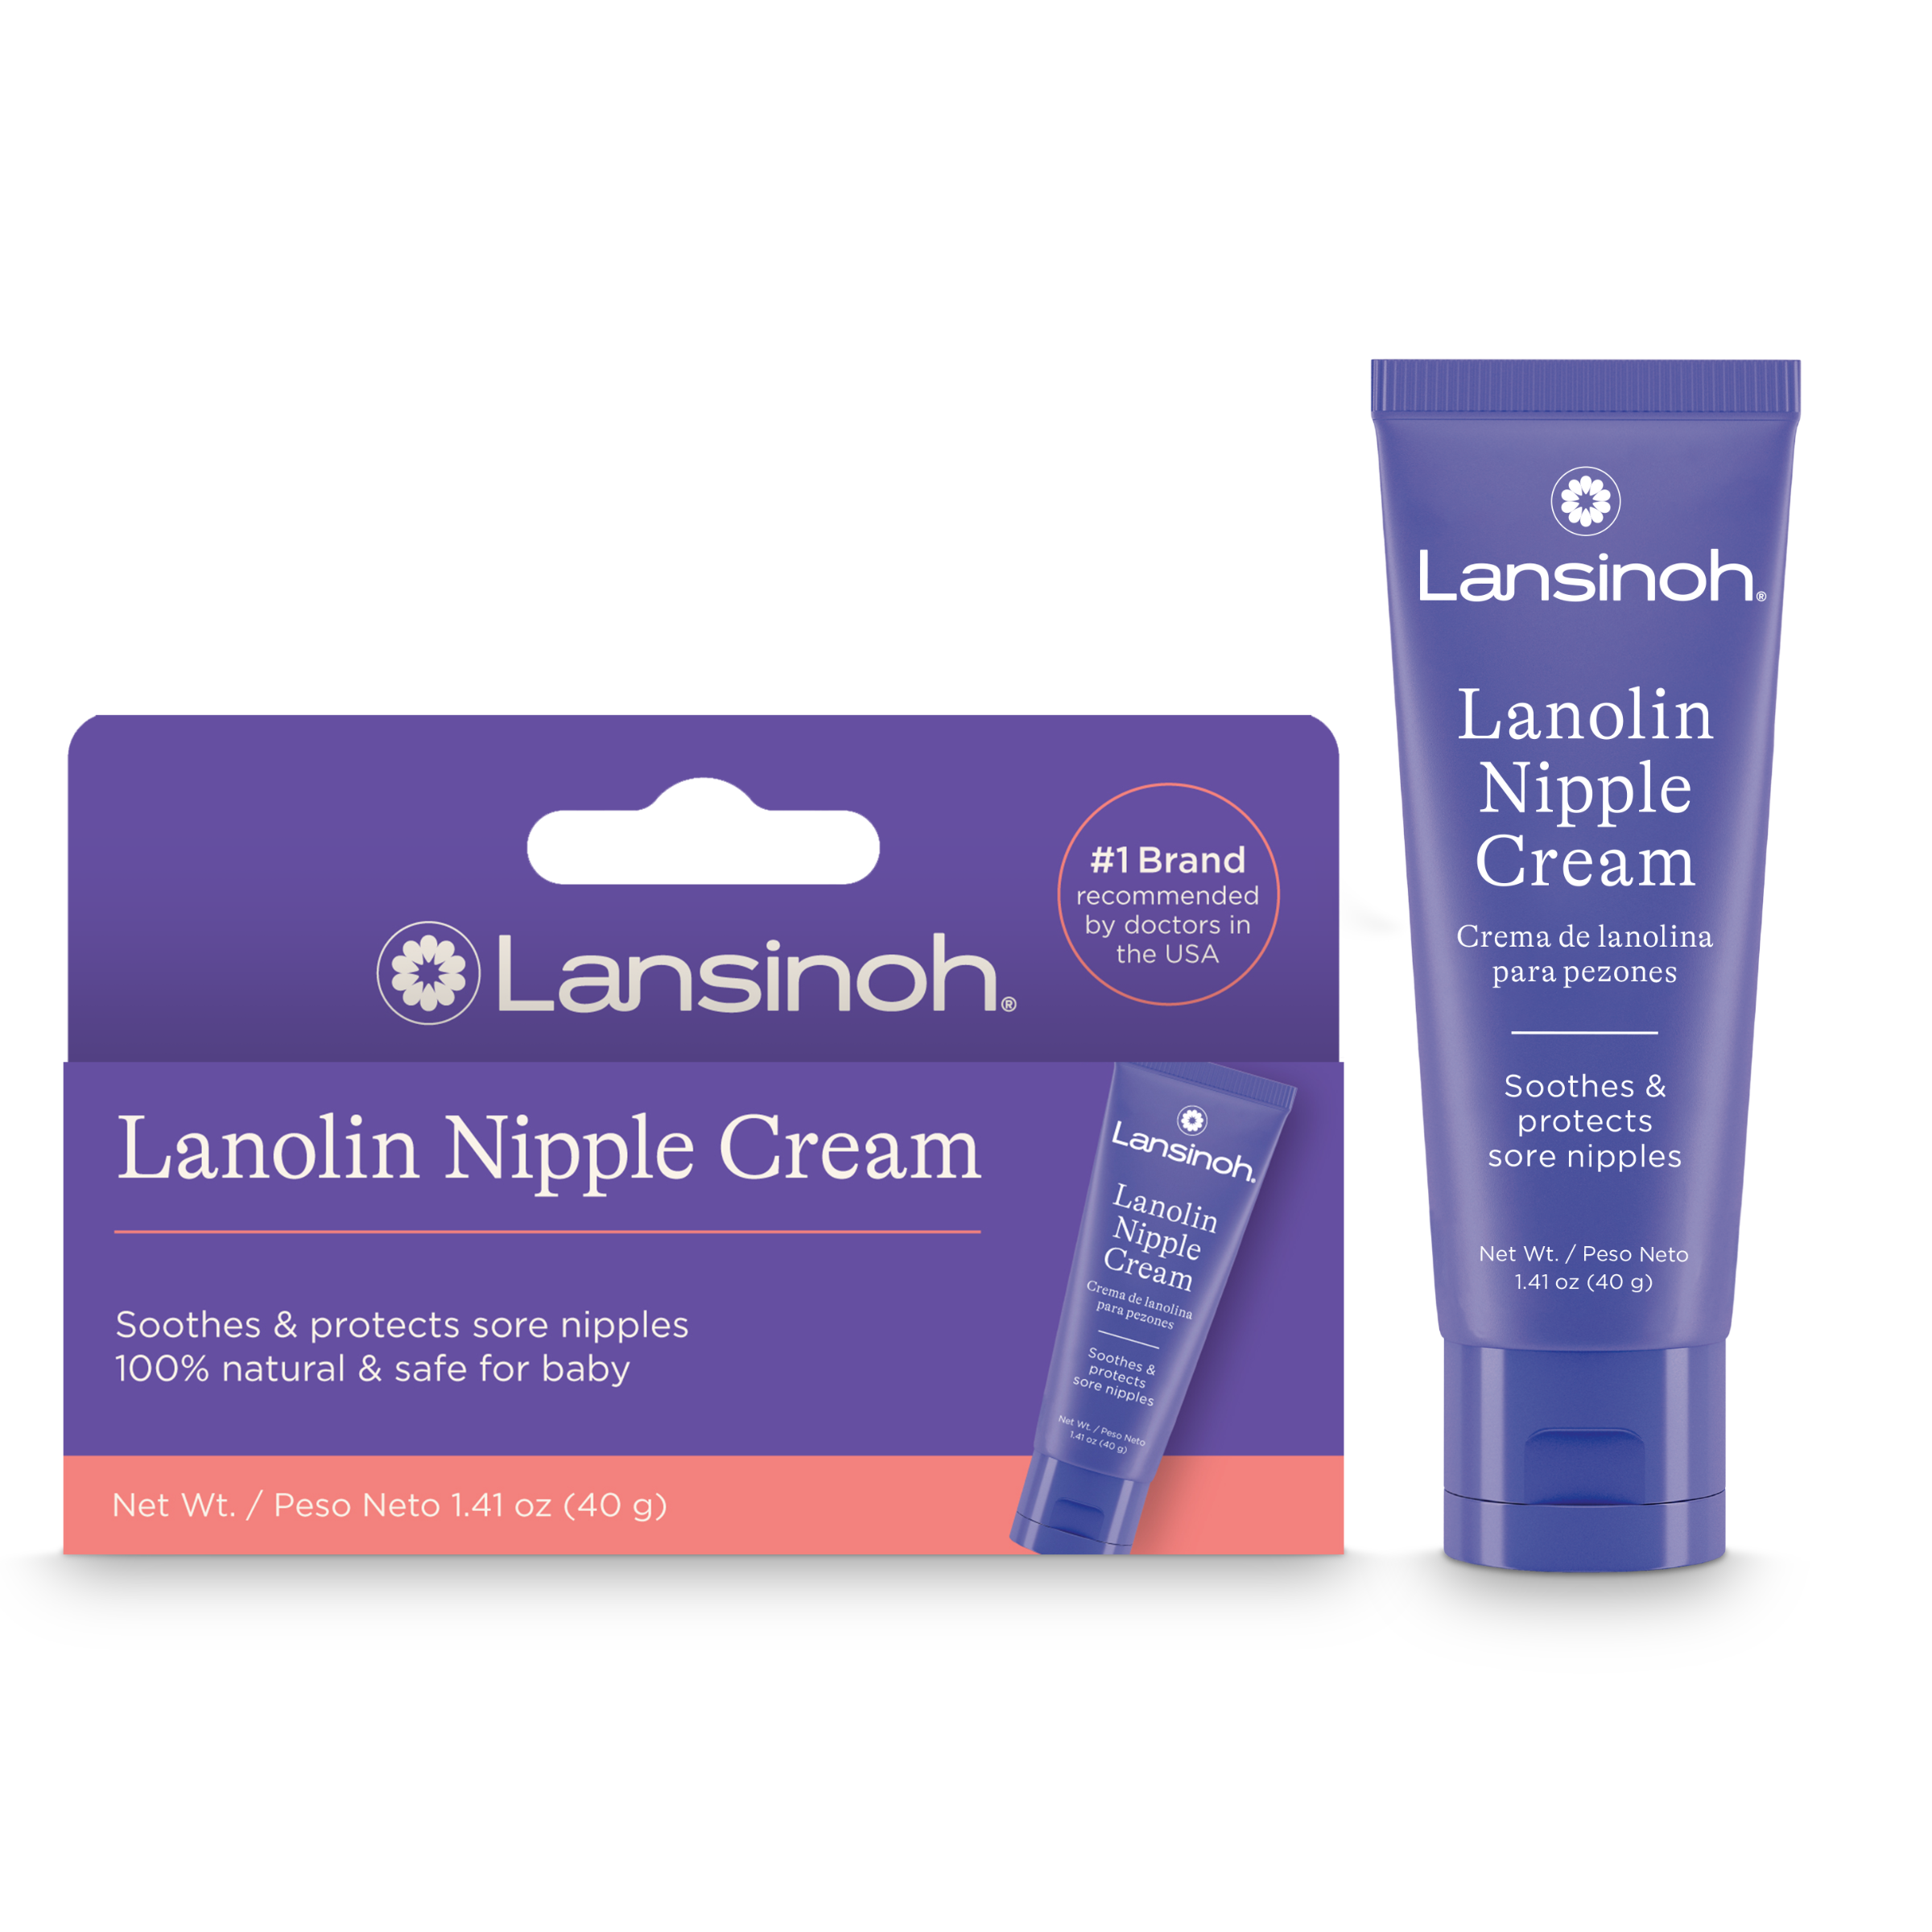 Lansinoh Lanolin Nipple Cream for Breastfeeding Moms, 1.41 Ounces - image 1 of 9